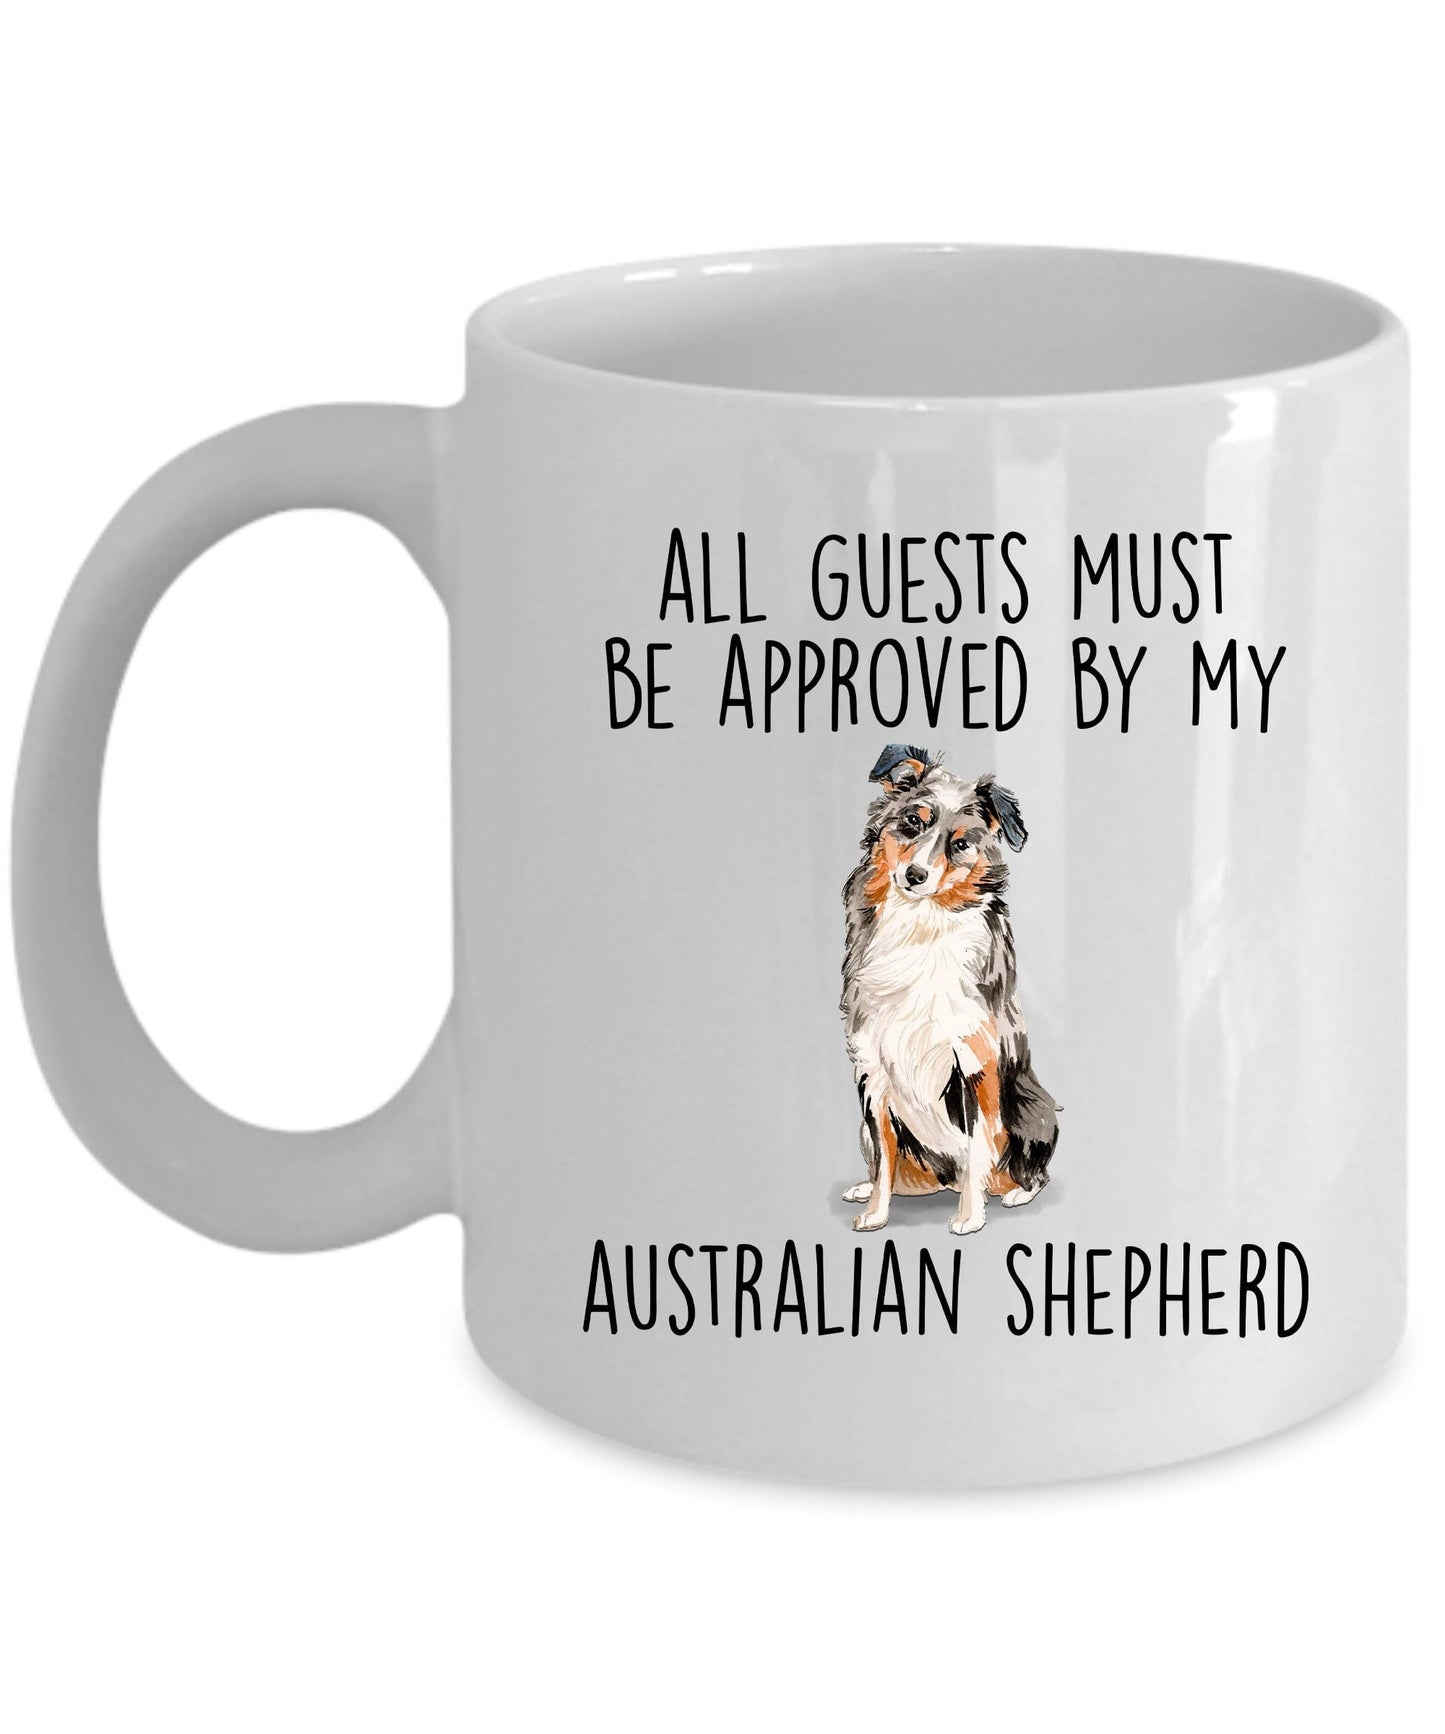 Australian Shepherd Dog Funny Coffee Mug - All guests Must Be Approved by my Australian Shepherd